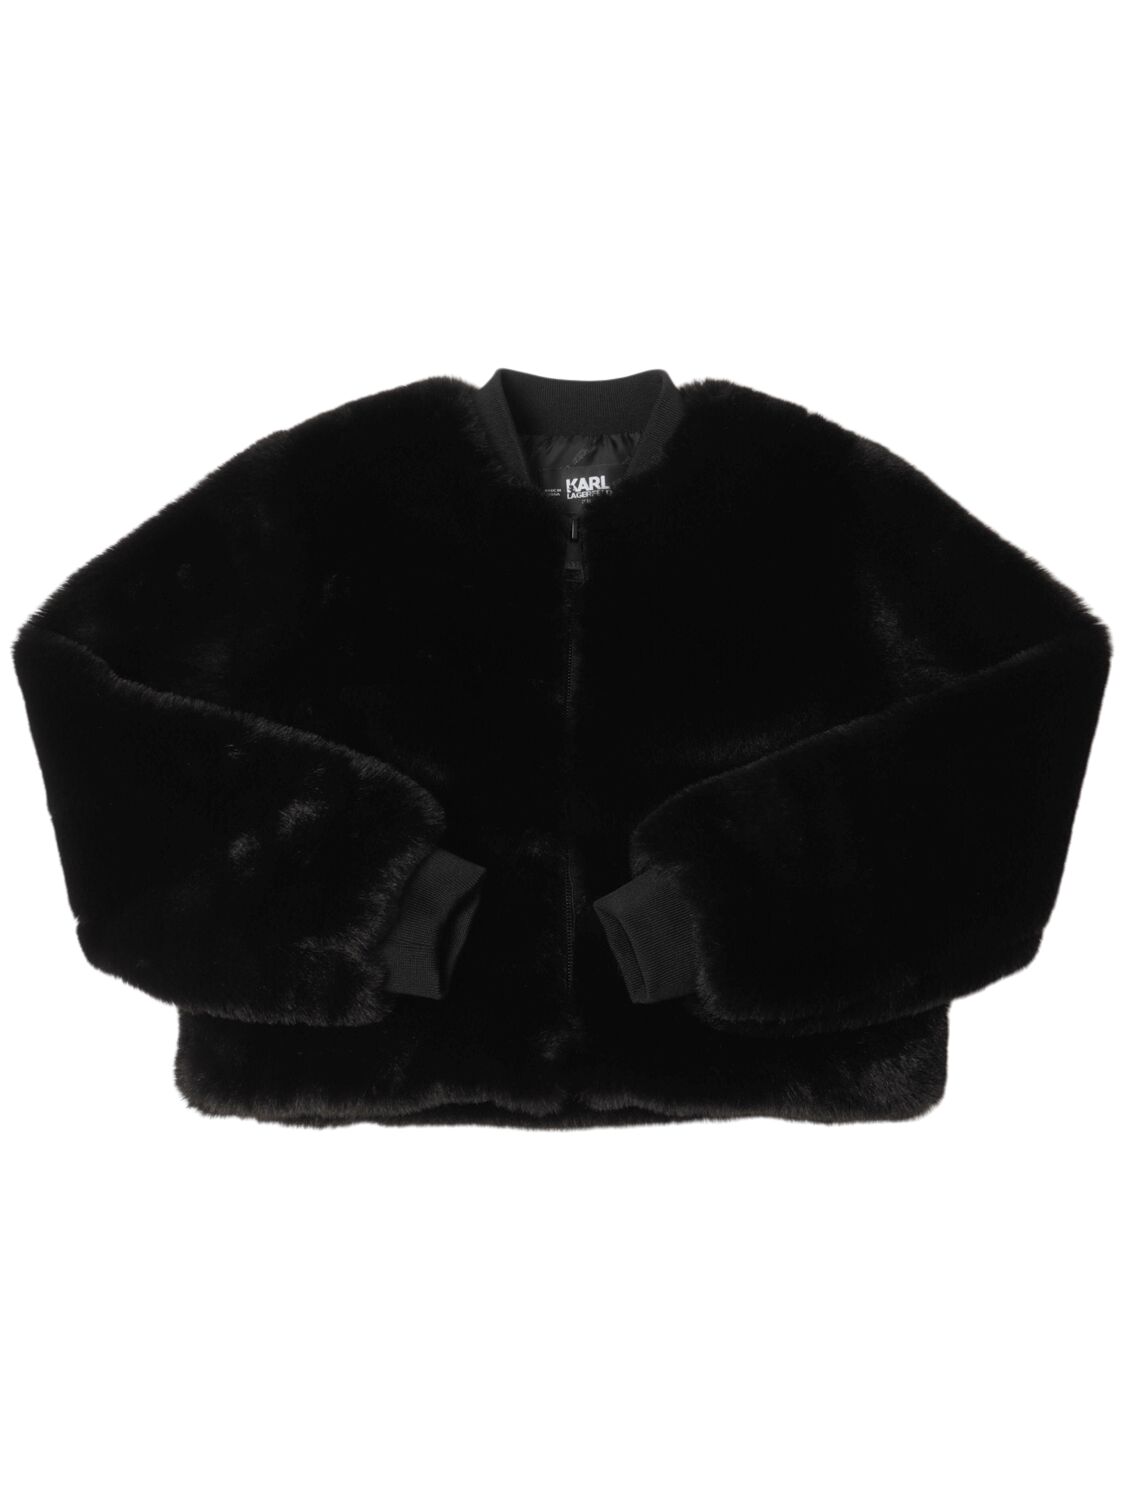 Karl Lagerfeld Faux Fur Bomber Jacket In Black